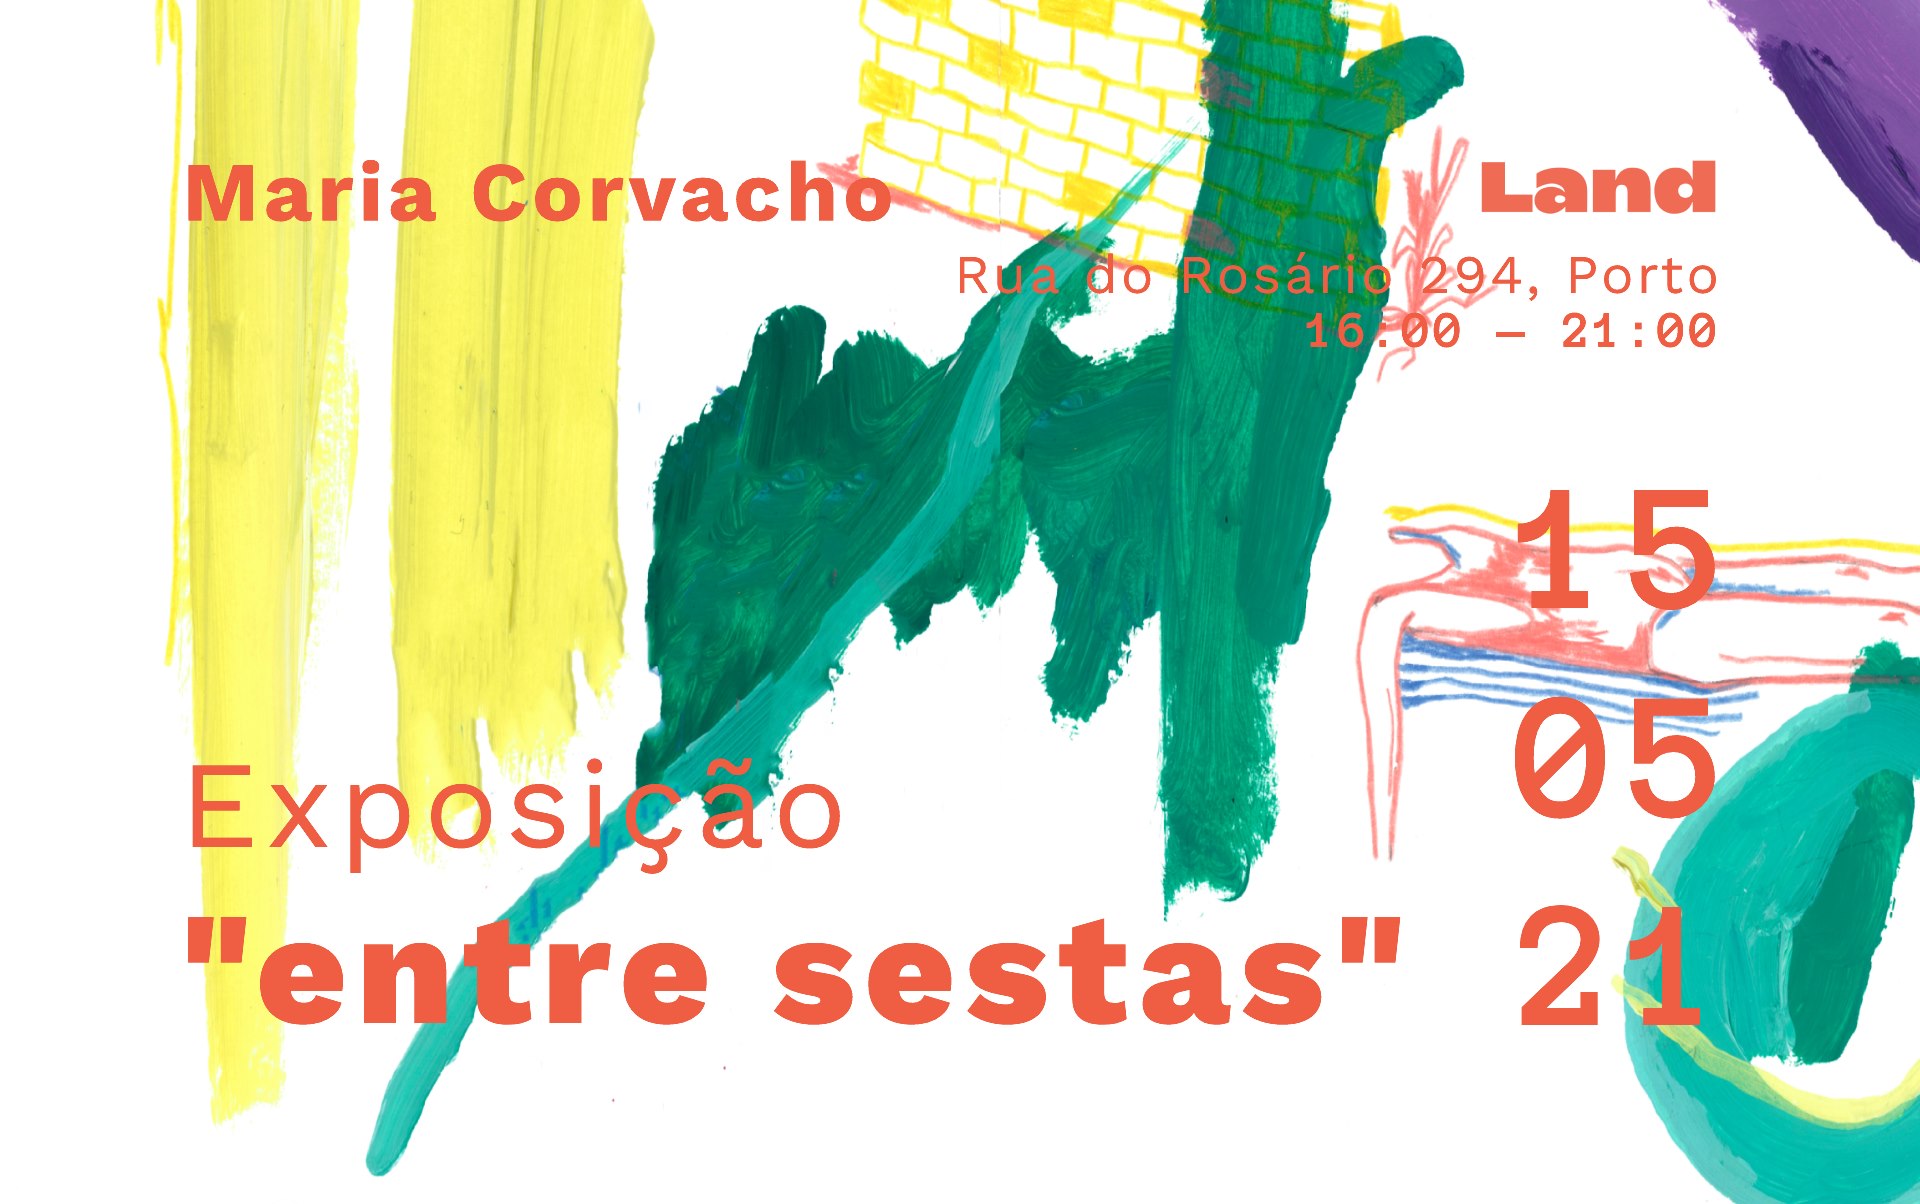 Entre sestas by Maria Corvacho - Event